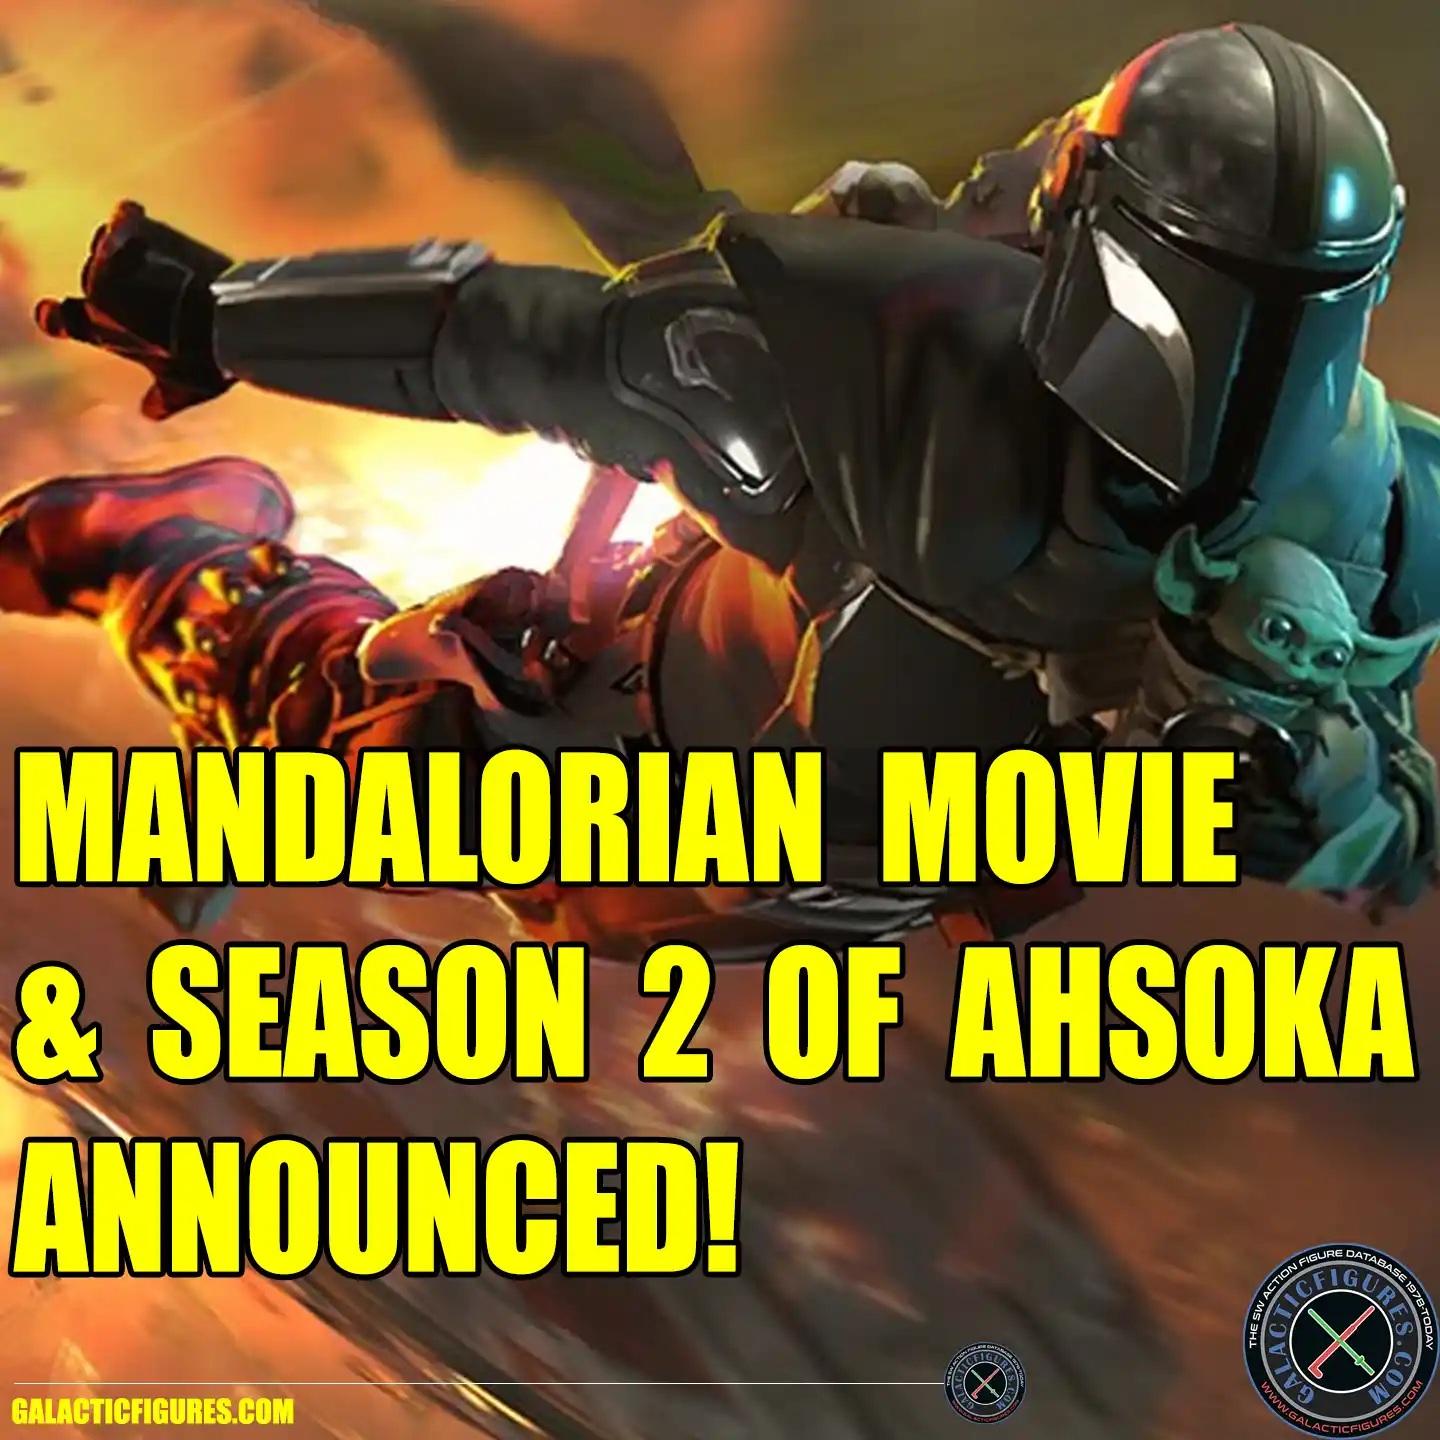 Mandalorian Movie and Ahsoka Season 2 Announced